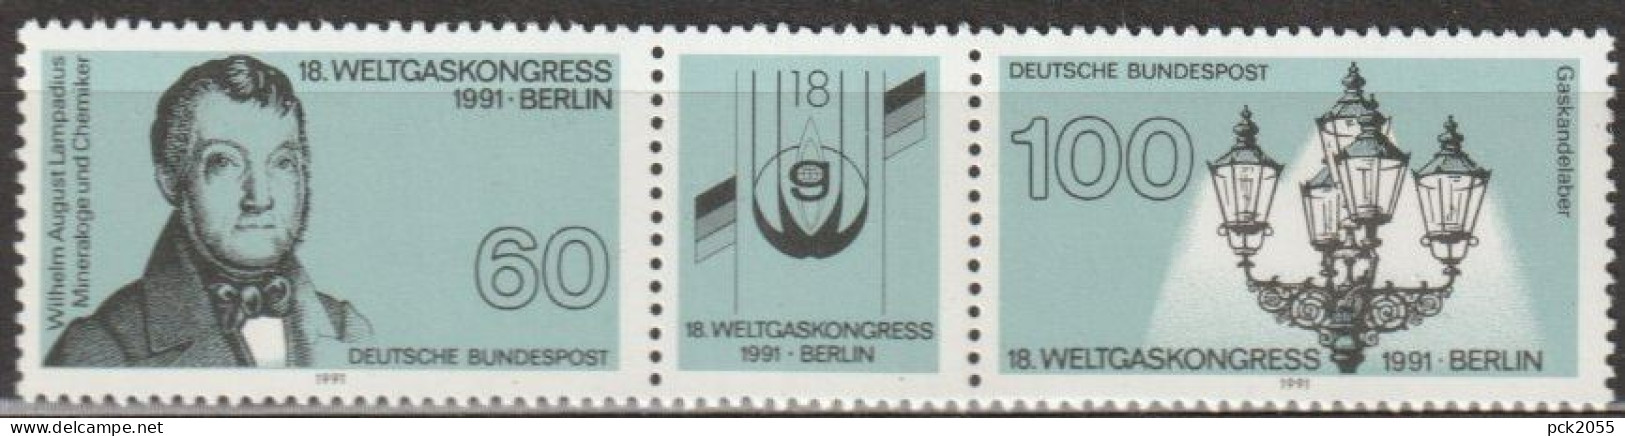 BRD 1991 MiNr.1537 - 1538 3er Streifen ** Postfrisch Weltgaskongress (A2574 )günstige Versandkoste - Neufs